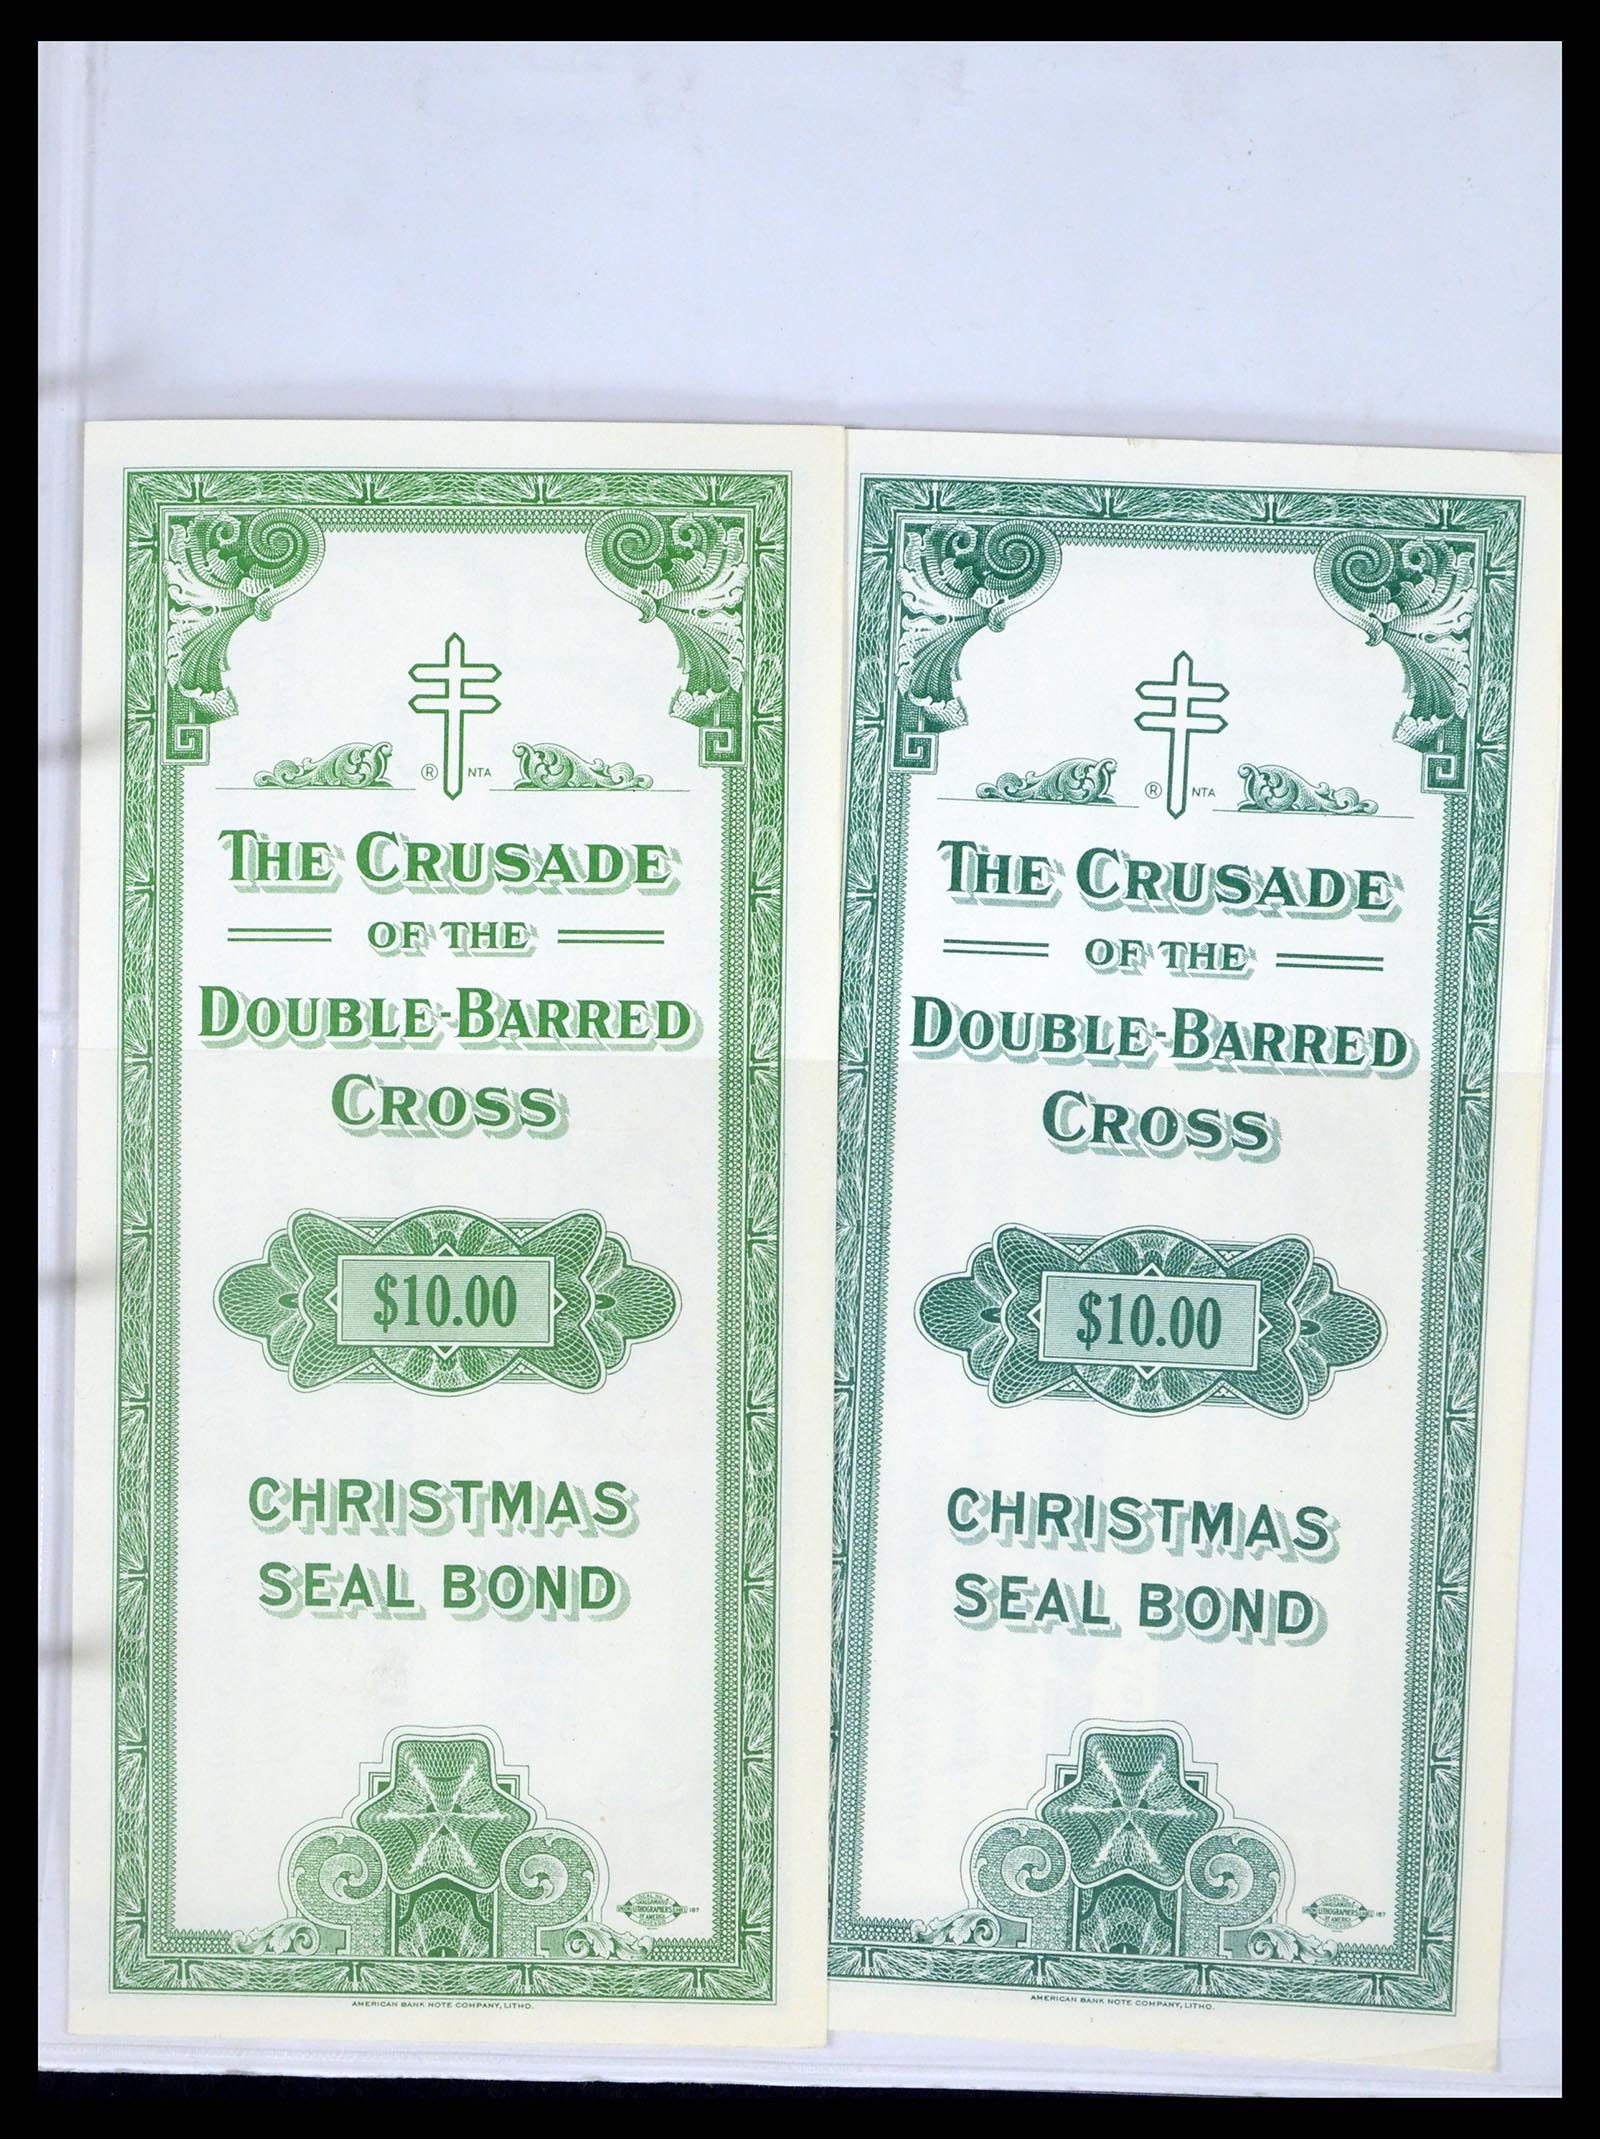 37668 053 - Stamp collection 37668 USA Christmas seals on cover 1908-2009.